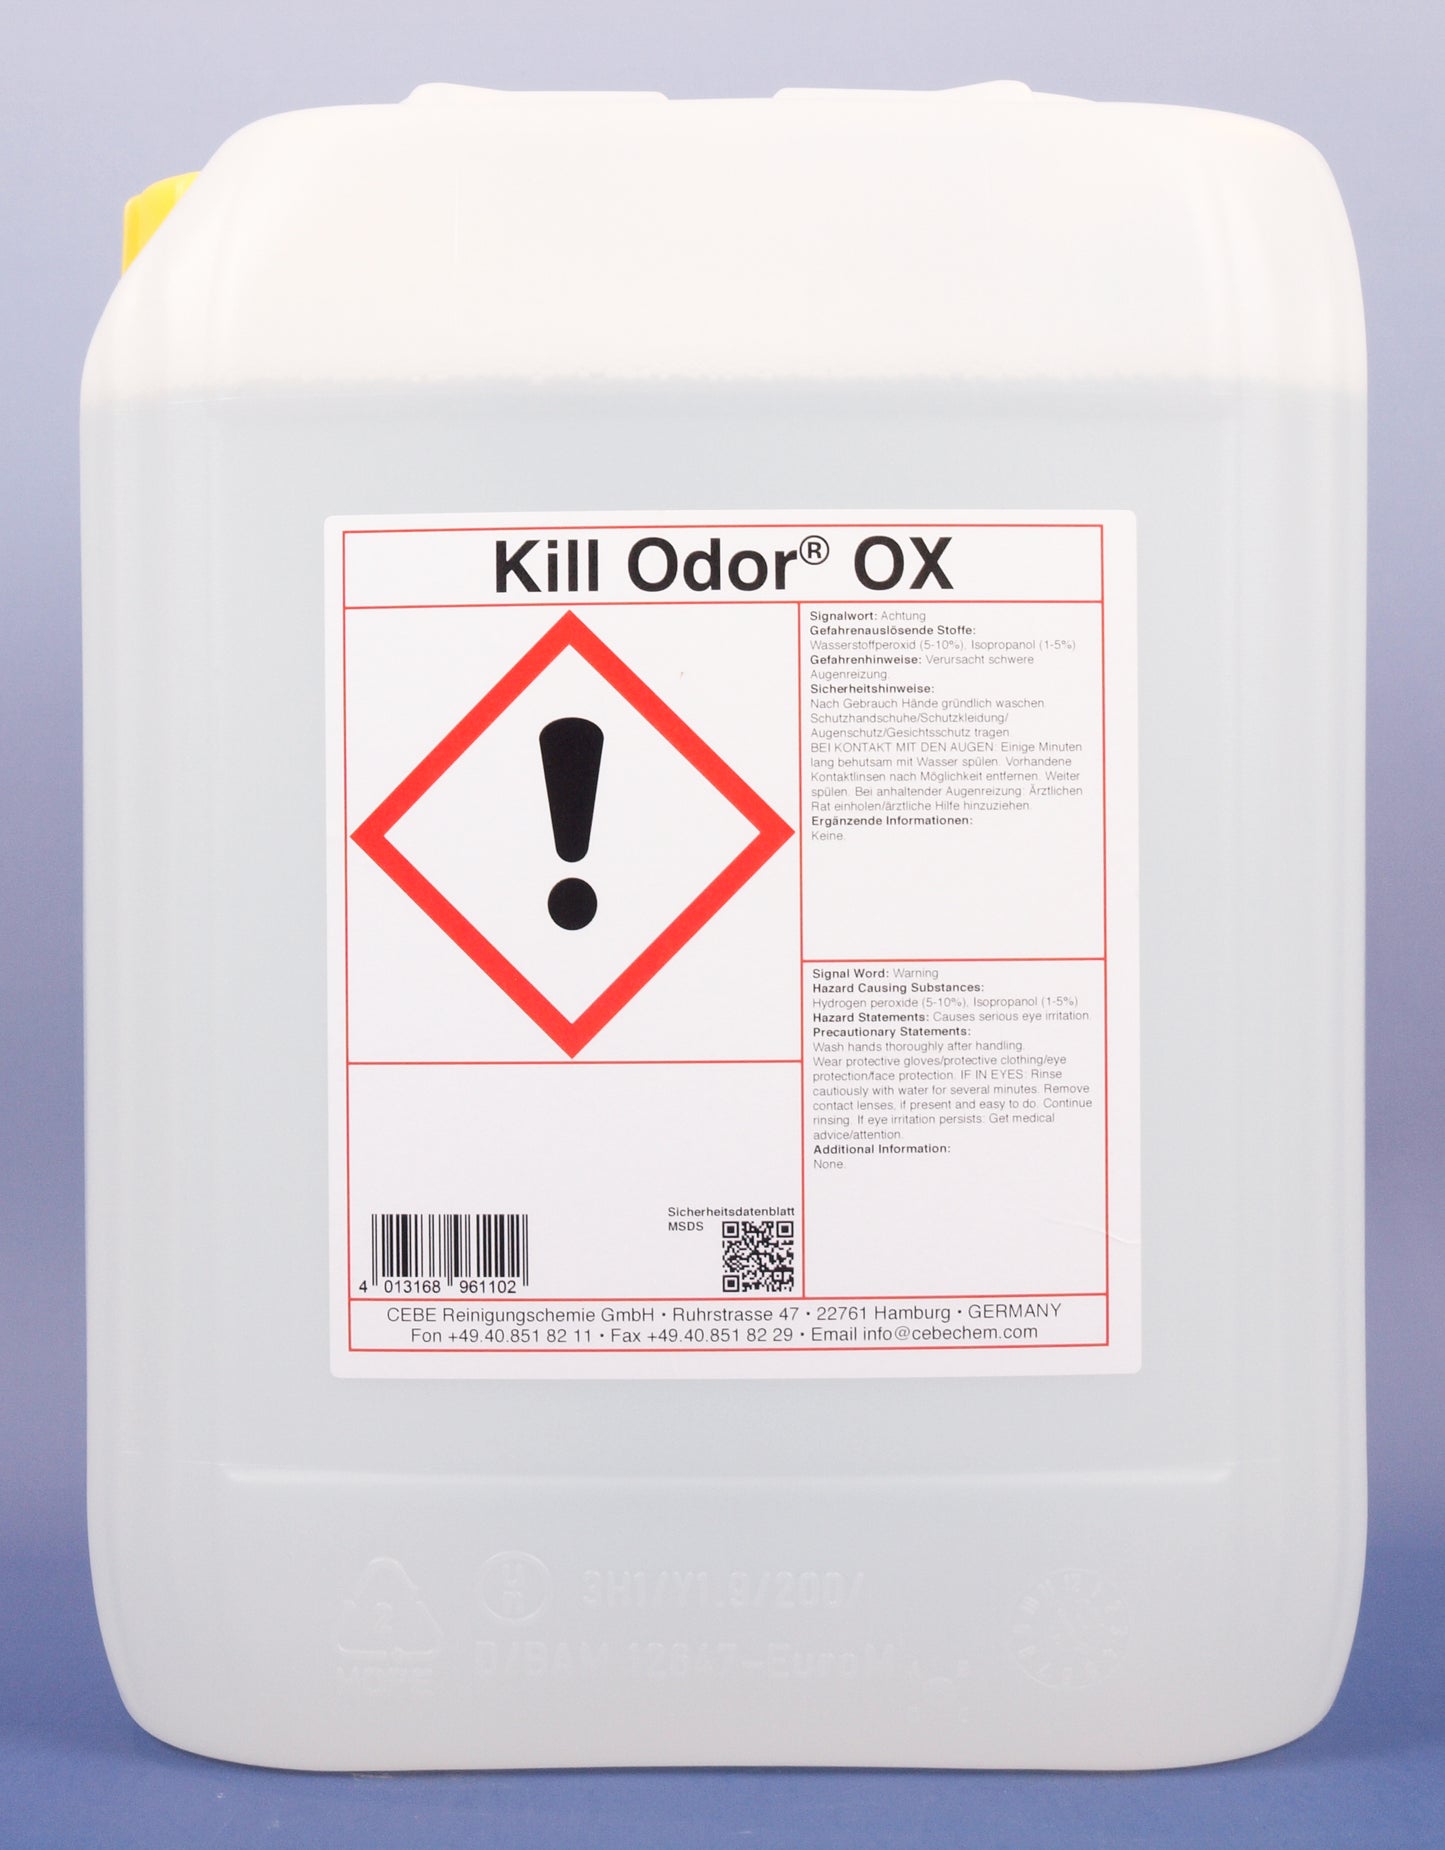 Kill Odor® OX